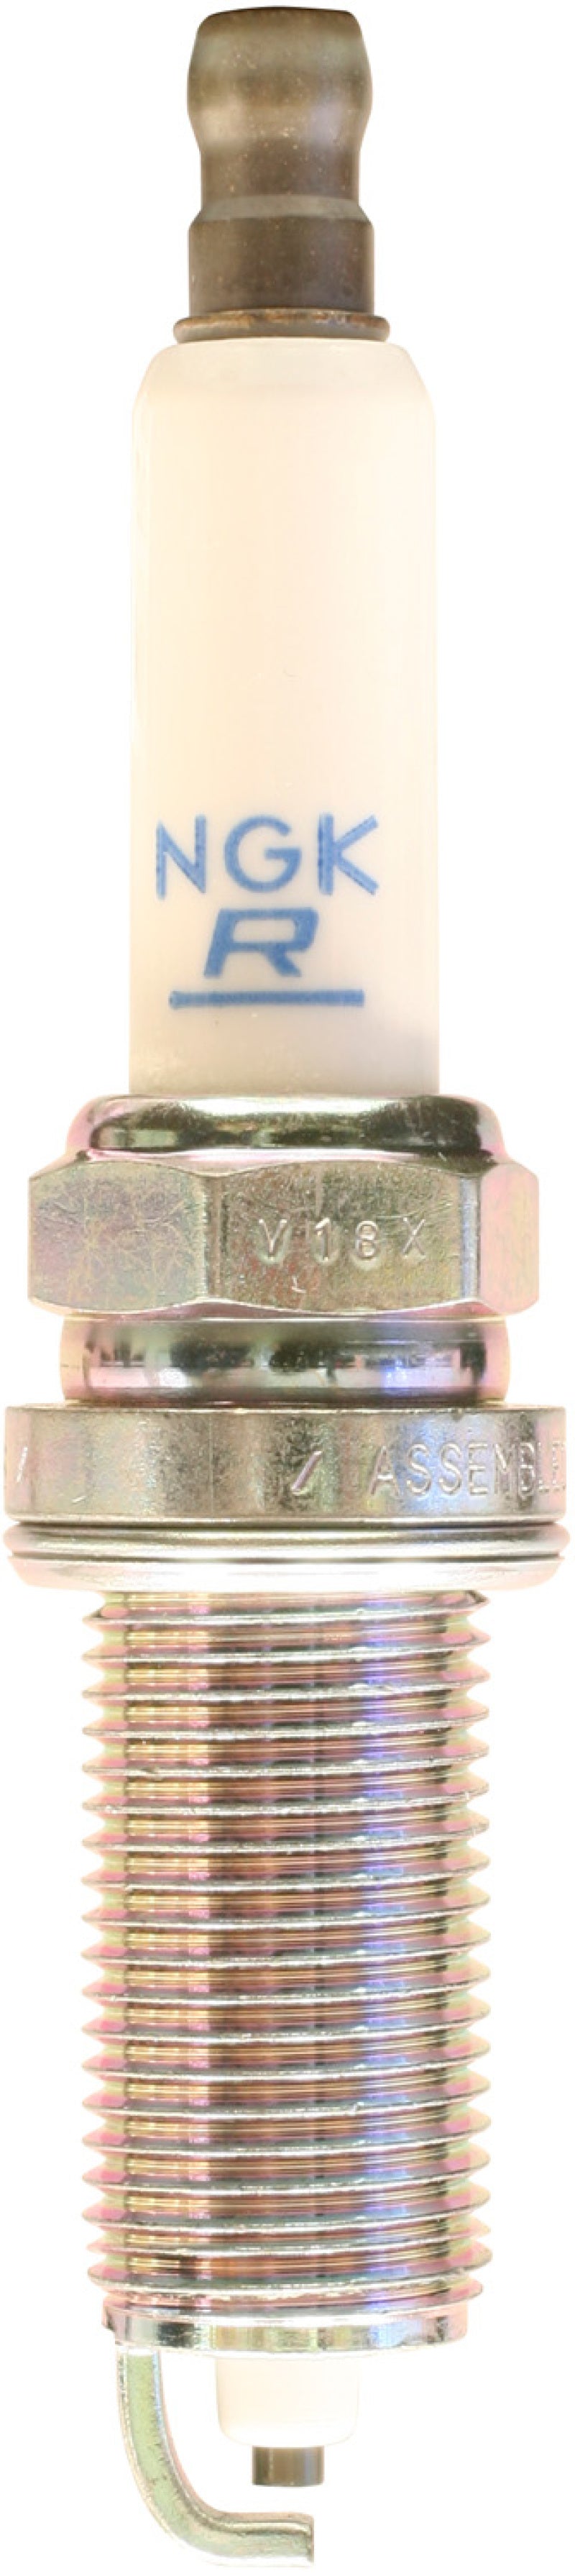 NGK Nickel Spark Plug Box of 4 (LZFR5C-11).